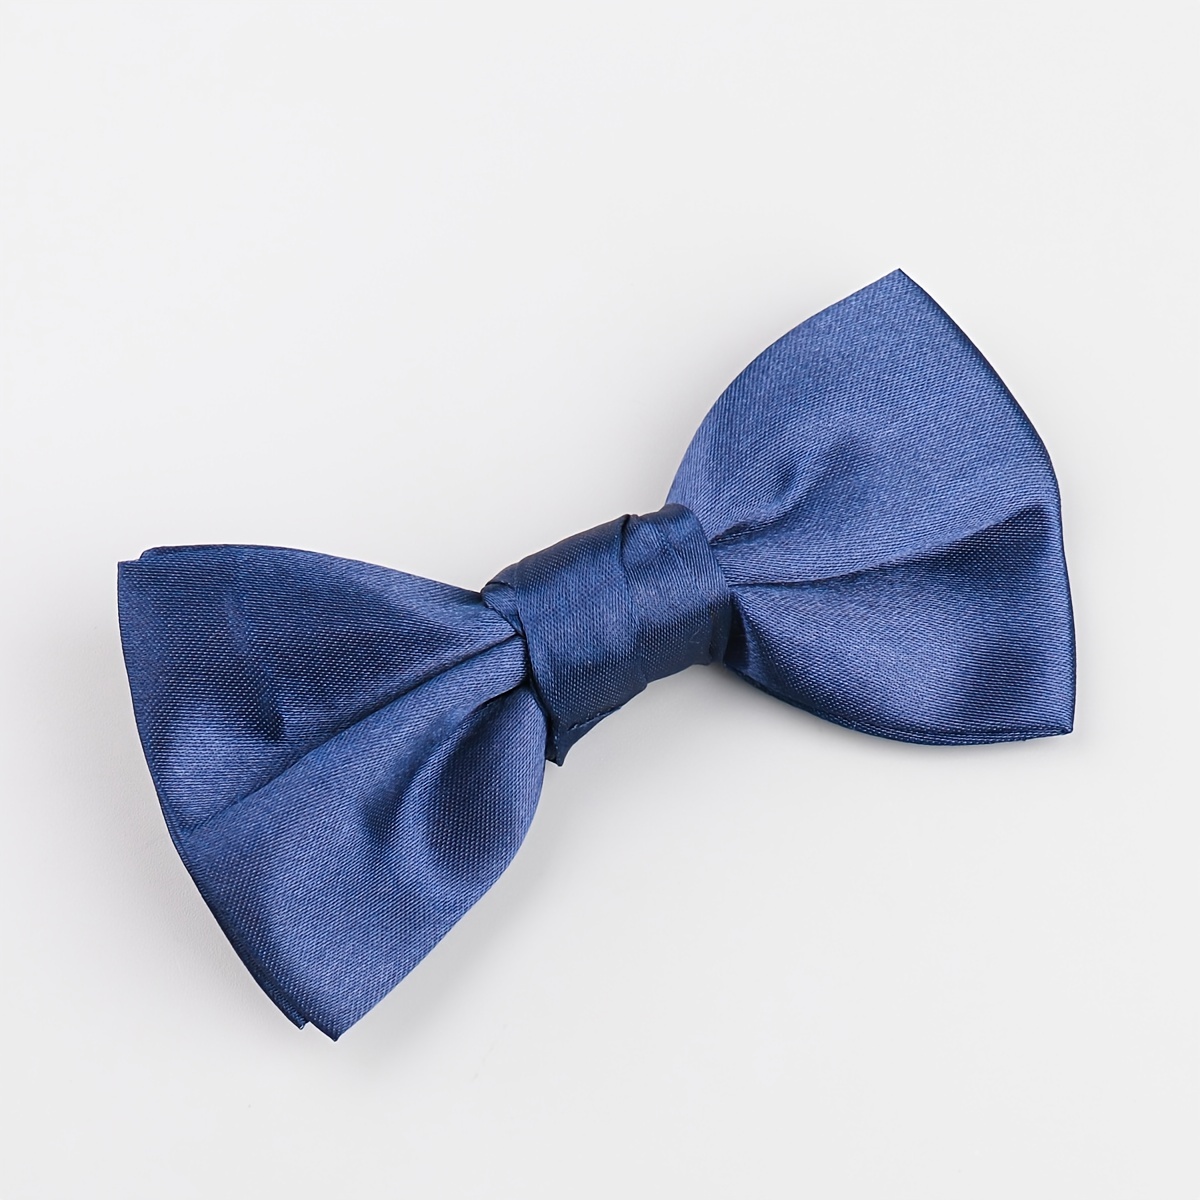 WXBDD Silk Suspenders Necktie Bow Tie Set for Men Blue Clip-on